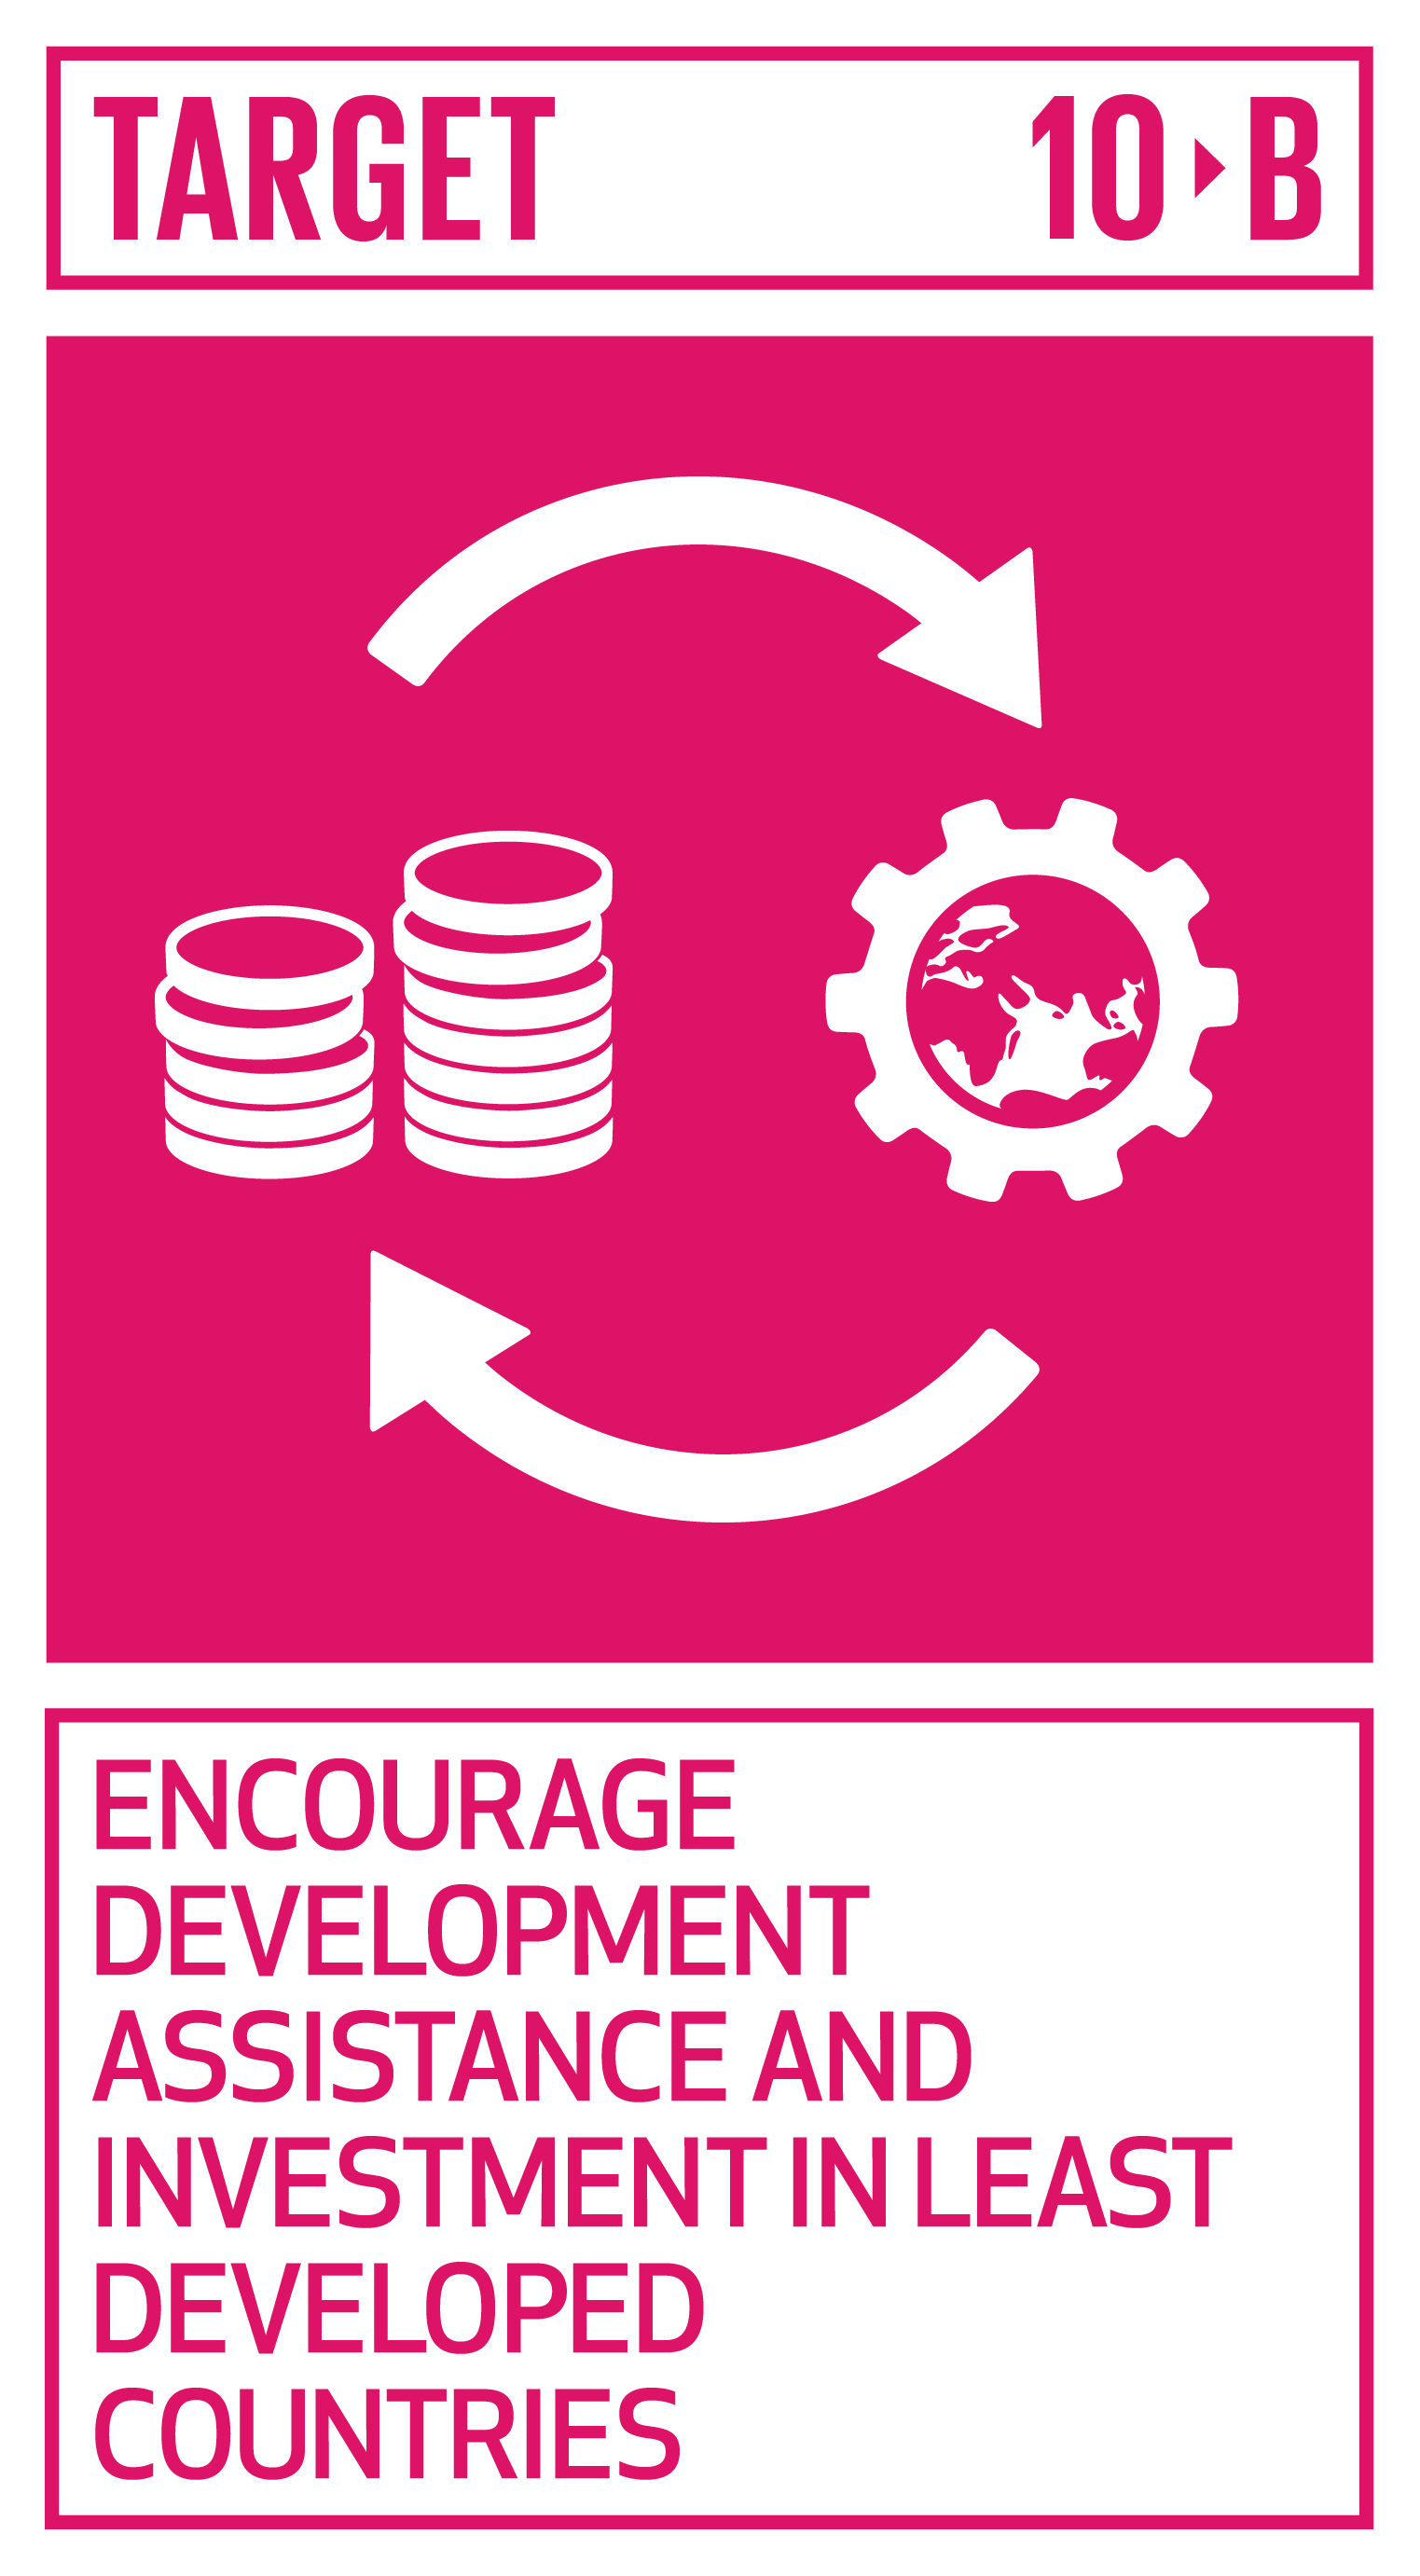 Goal,target,永續發展目標SDGs10,目標10.B鼓勵發展援助及投資低度開發國家